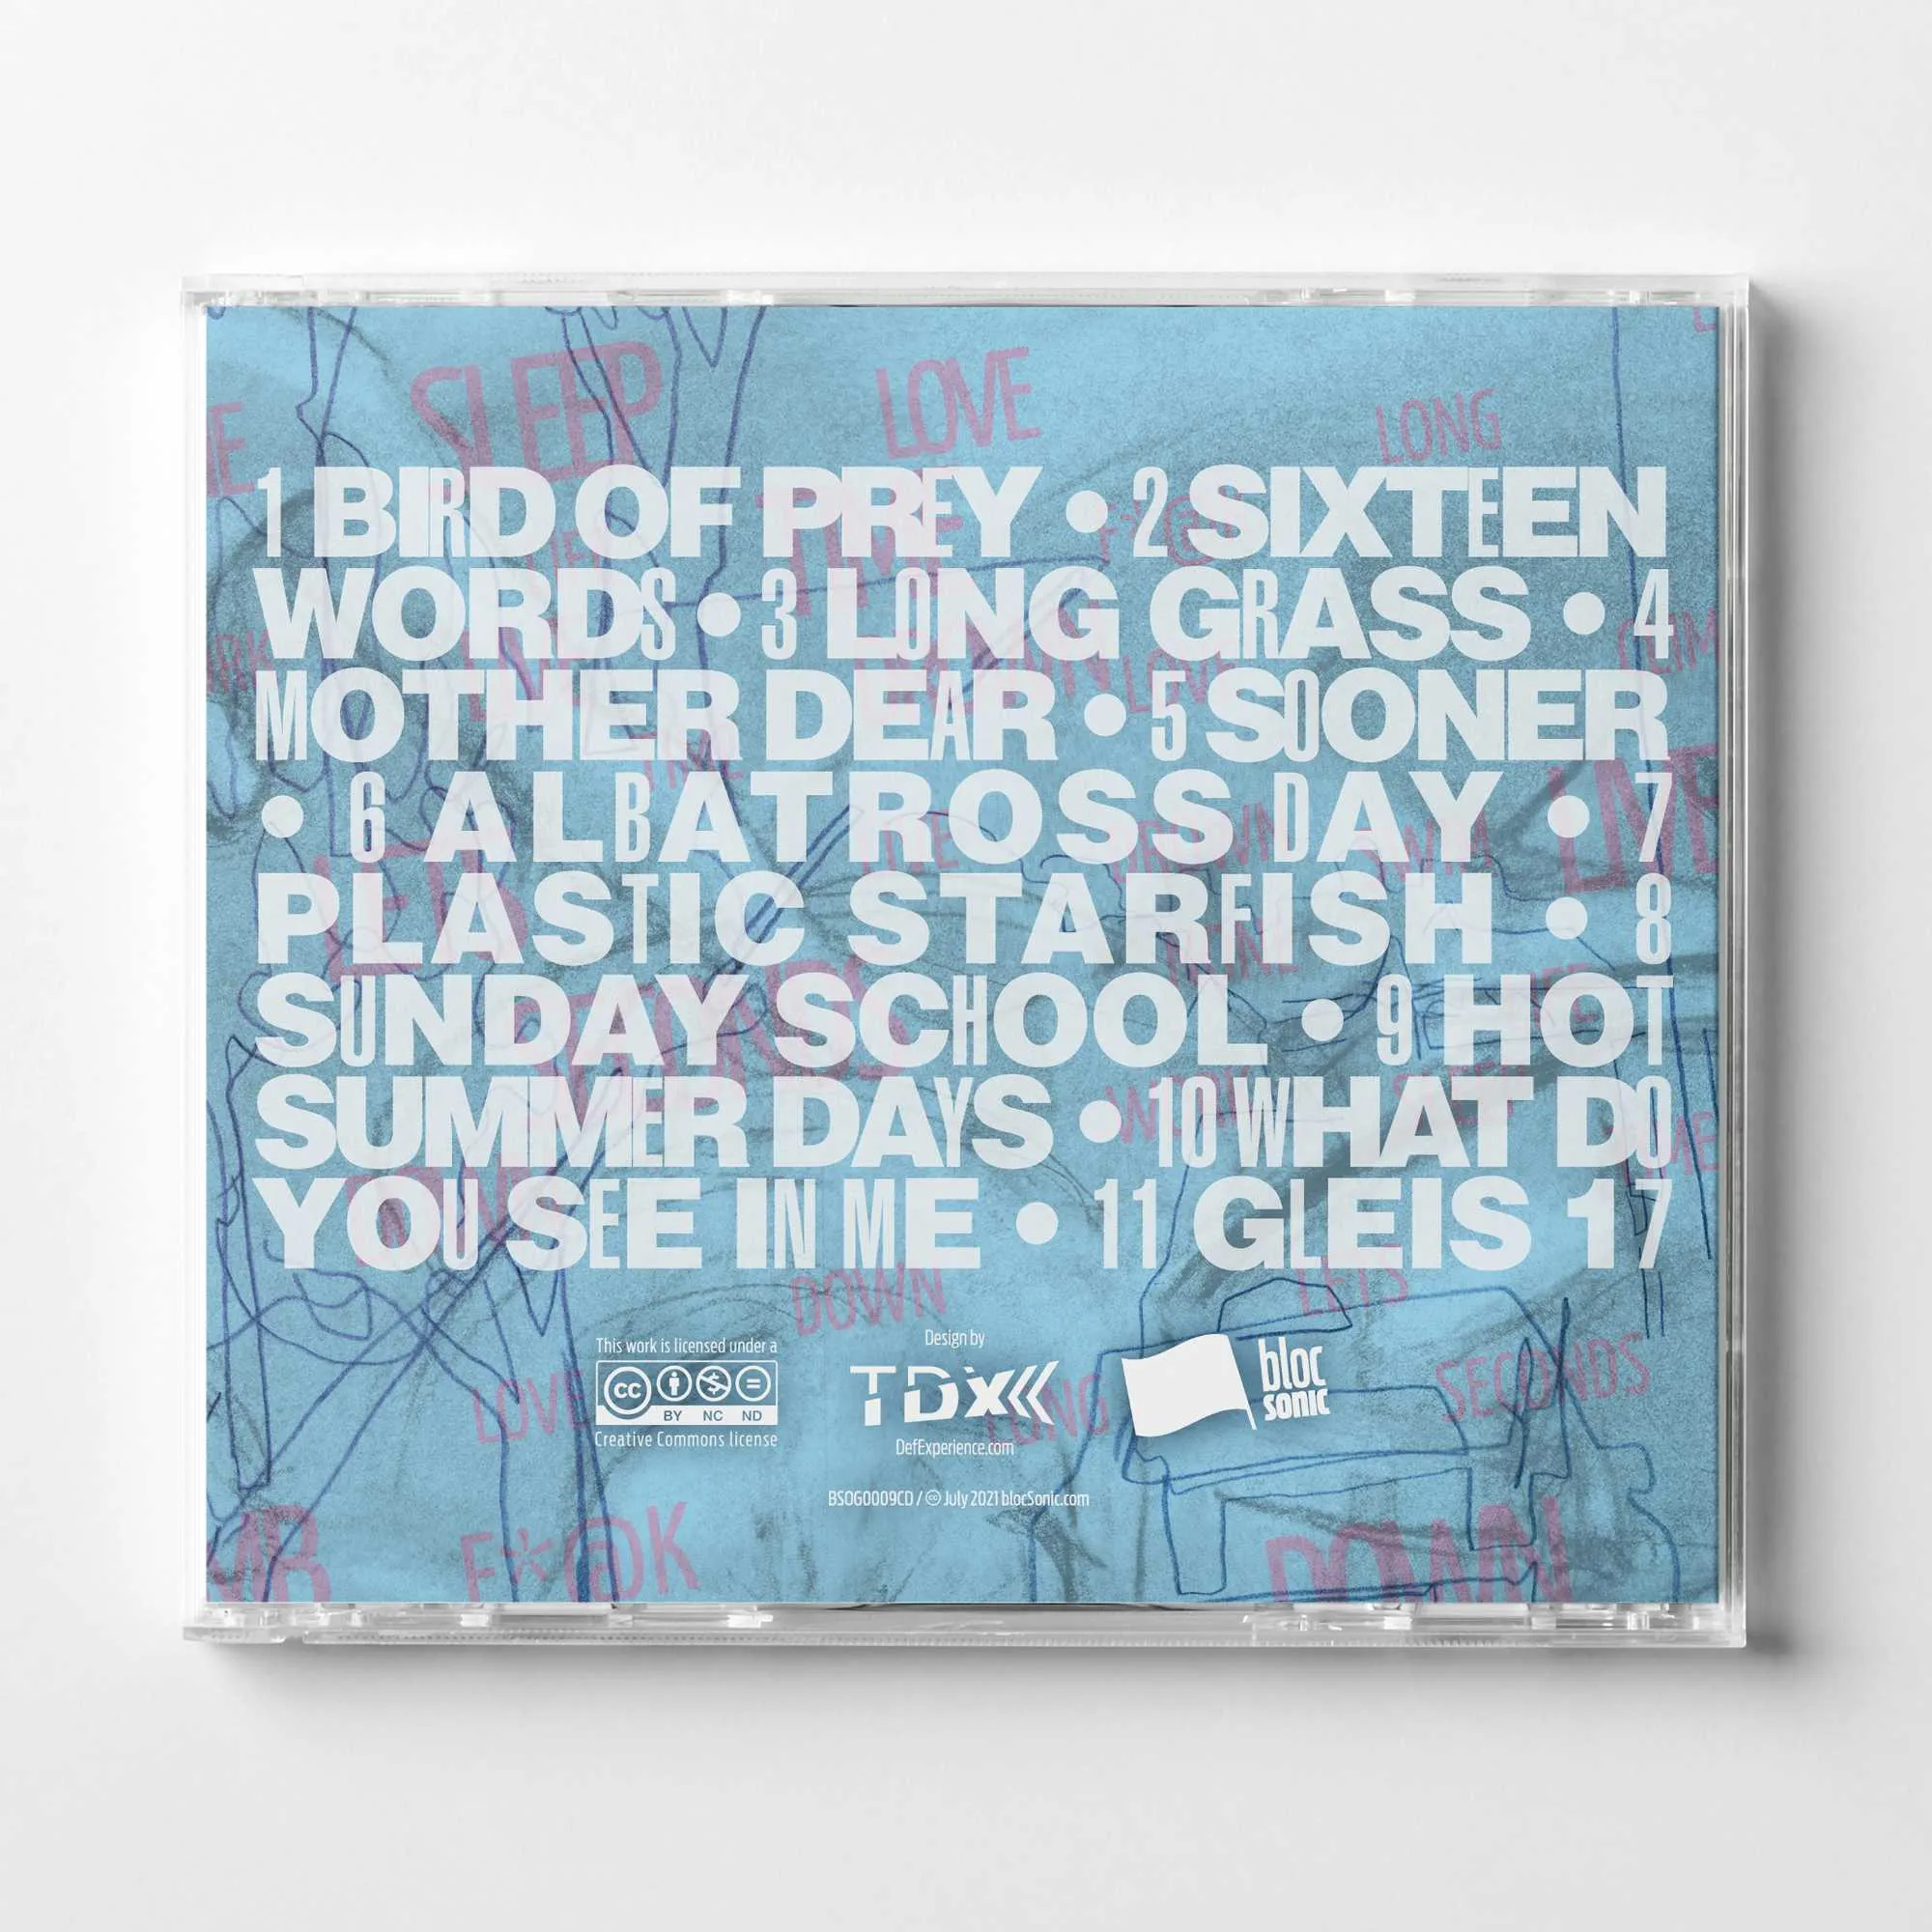 Album promo for “Sixteen Words” by Liam Stewart